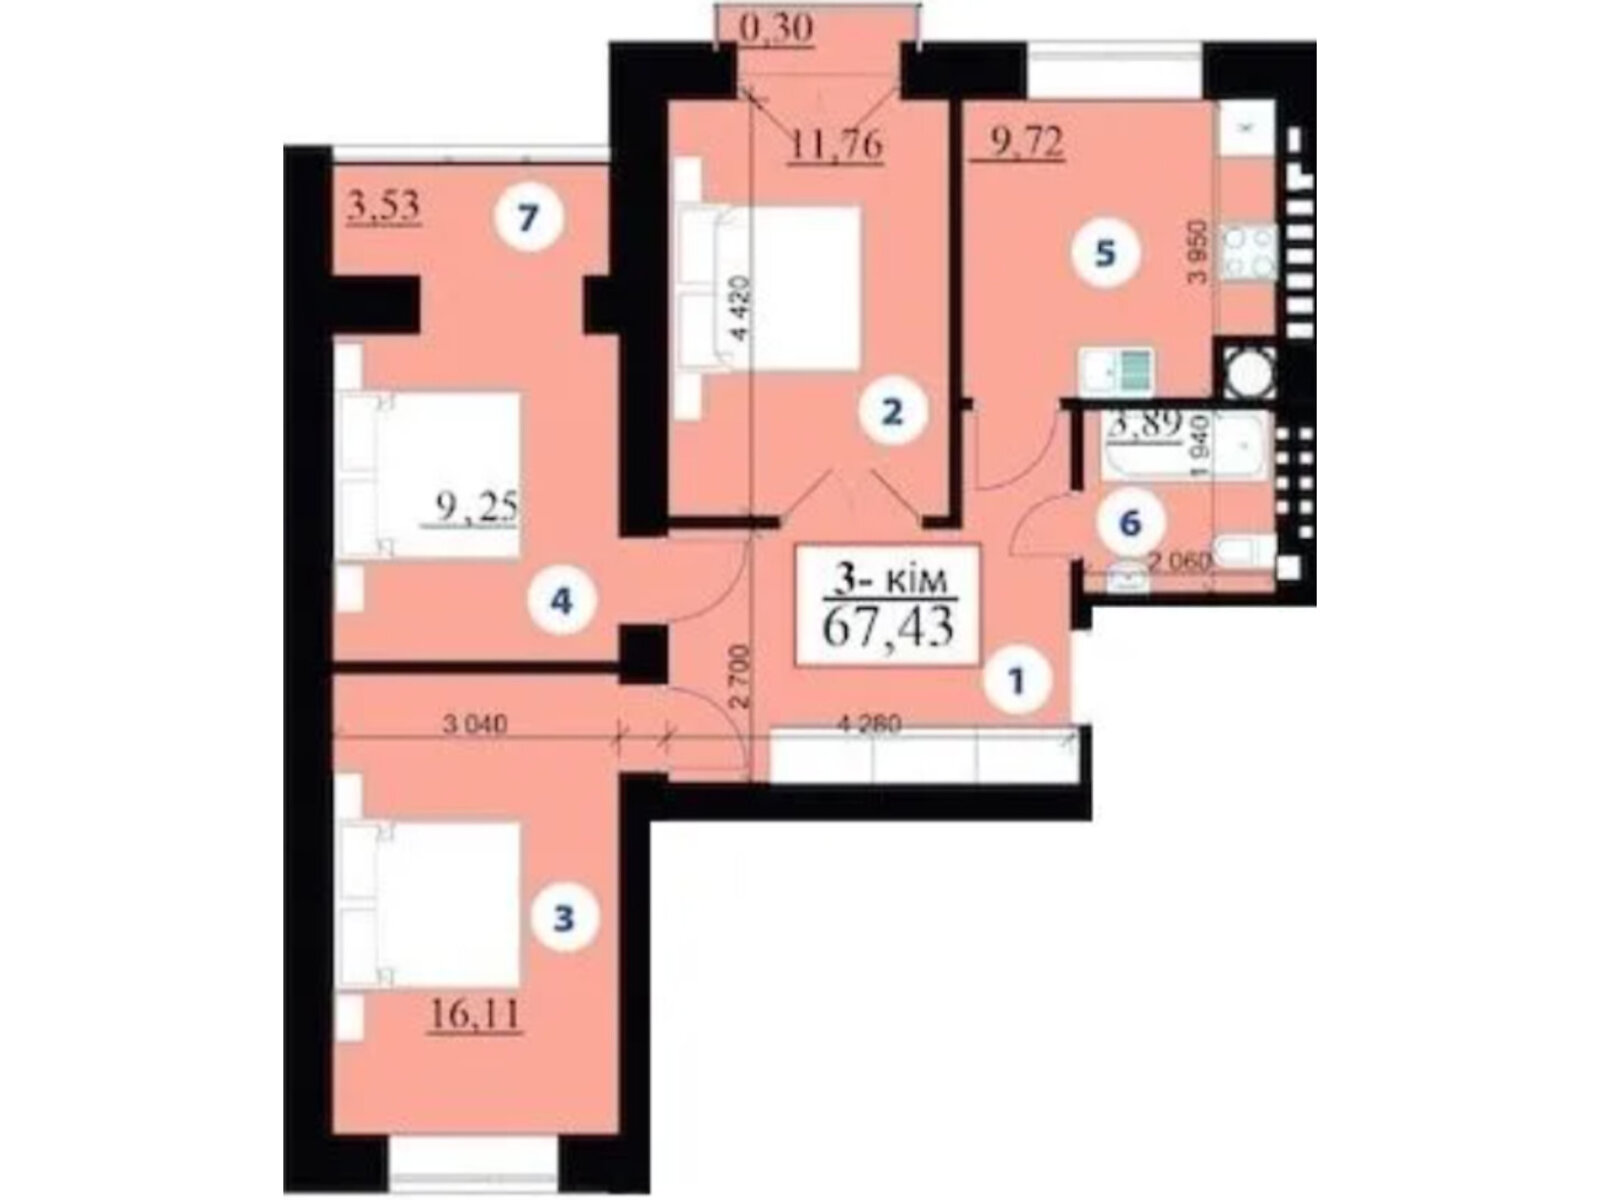 Продажа трехкомнатной квартиры в Ивано-Франковске, на ул. Гетьмана Ивана Мазепы 168, фото 1